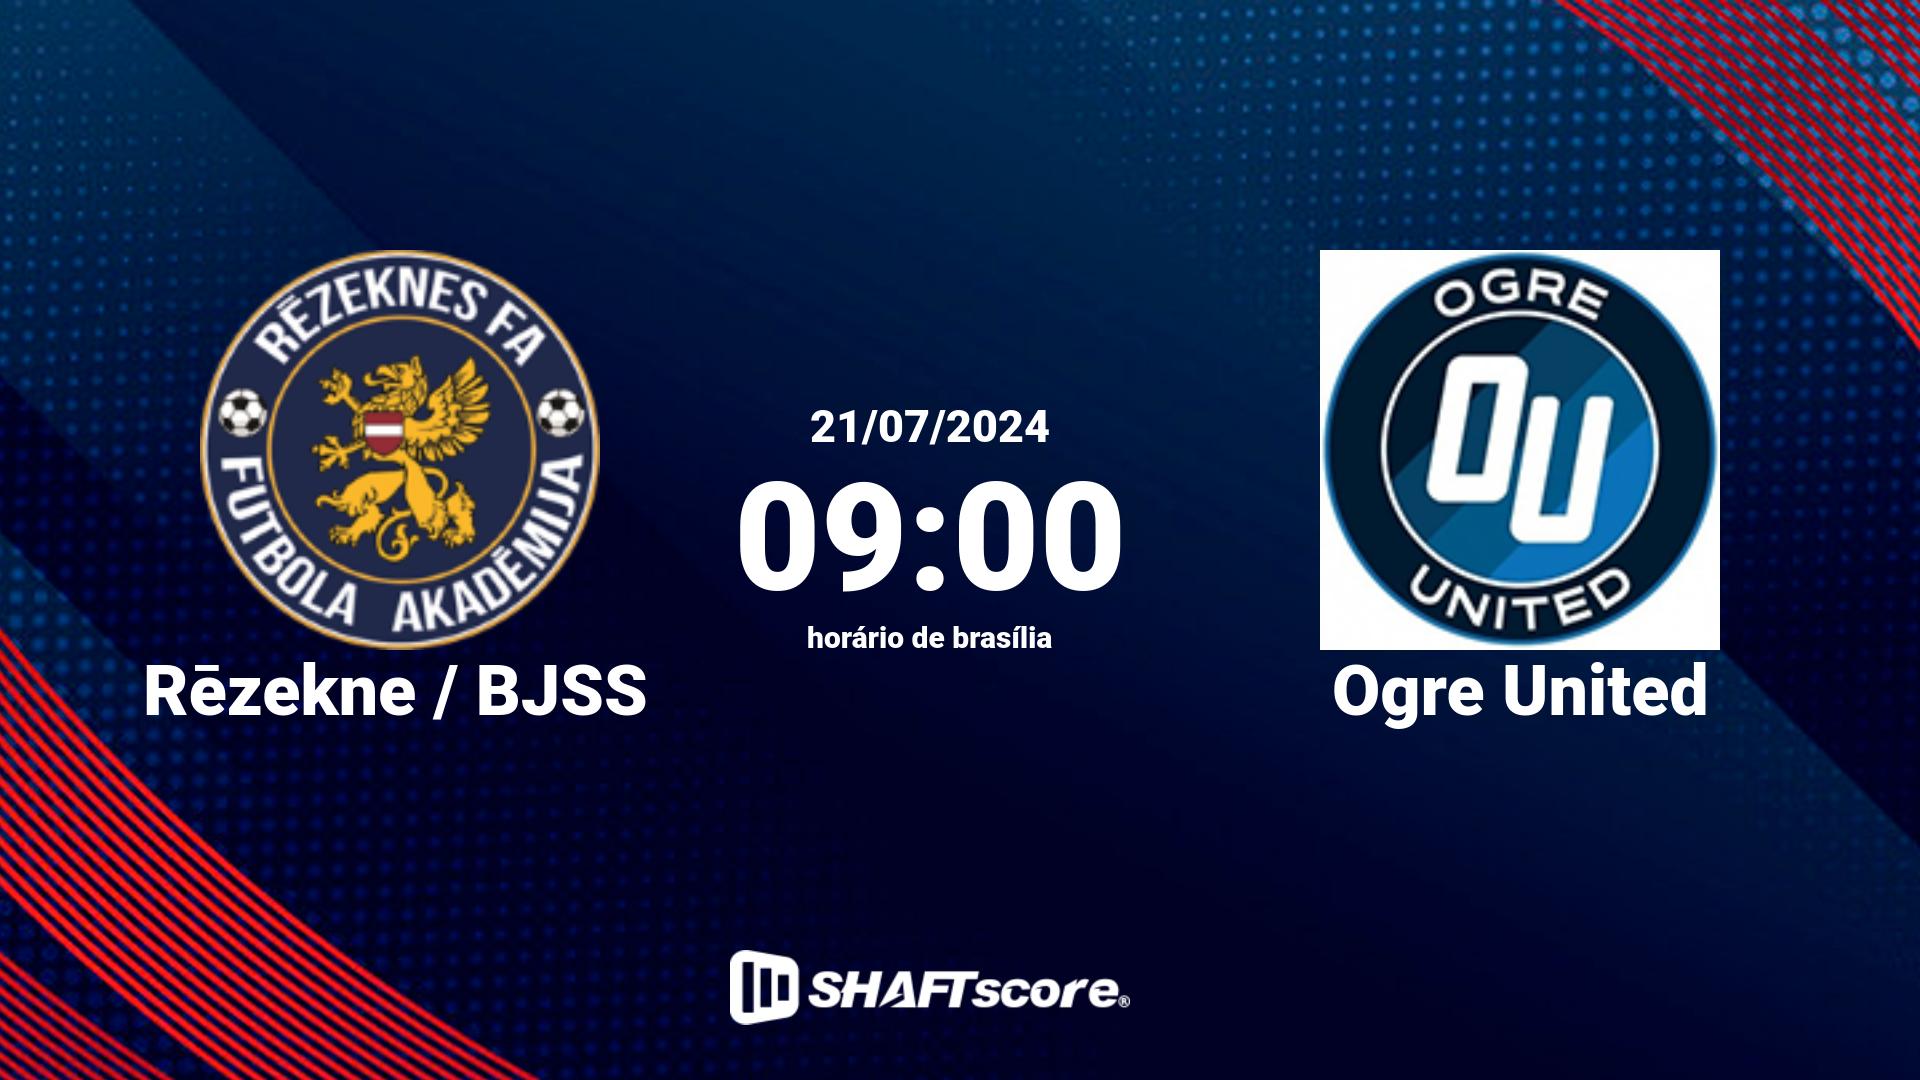 Estatísticas do jogo Rēzekne / BJSS vs Ogre United 21.07 09:00